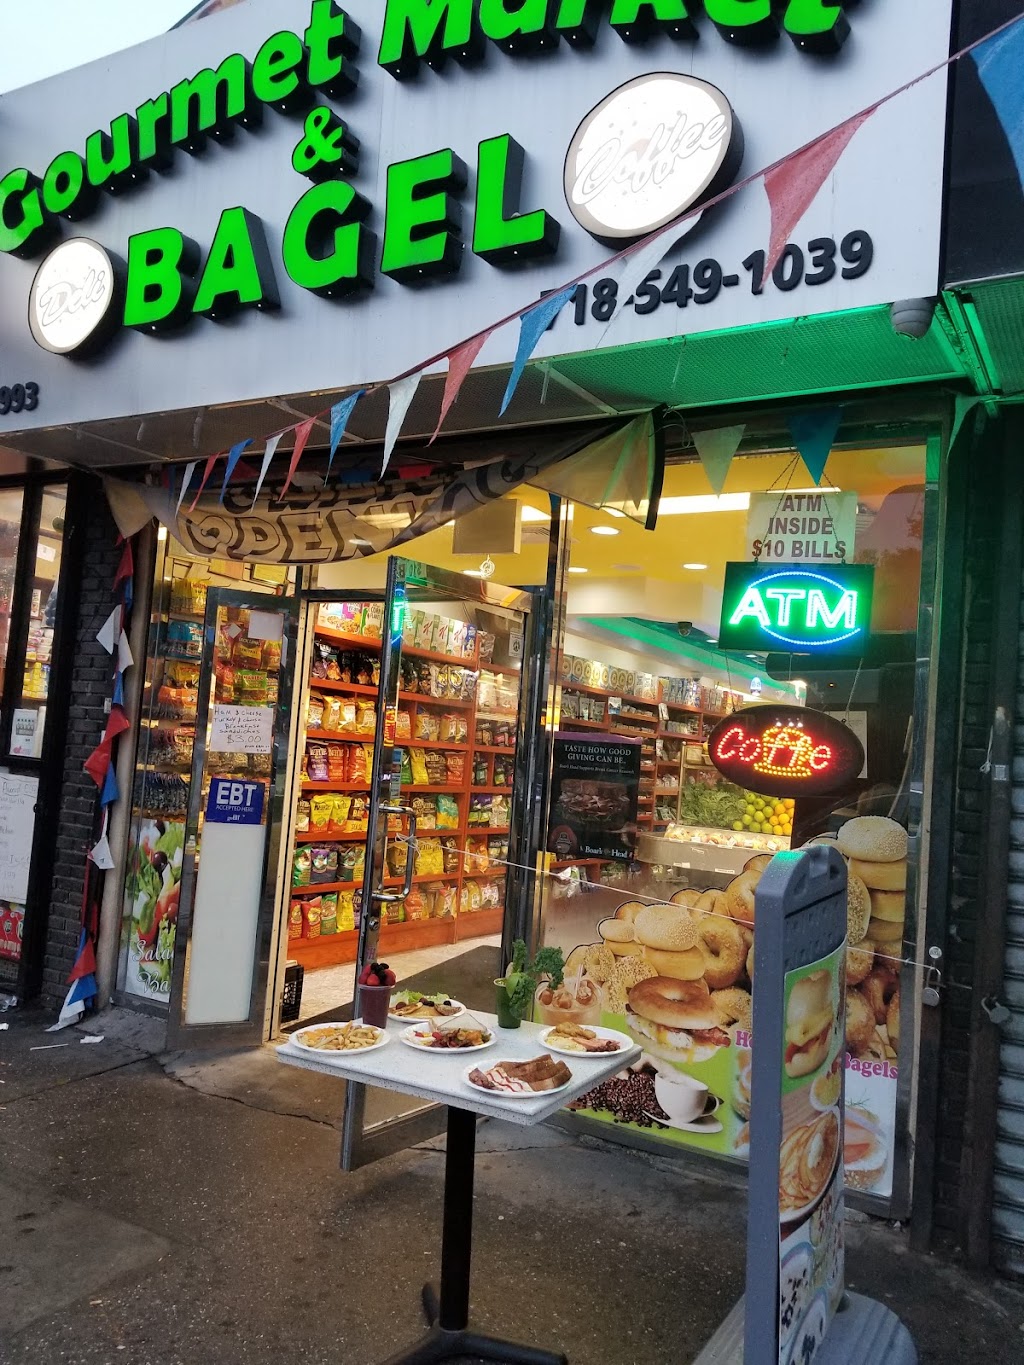 Gourmet Market & Bagel | 5993 Broadway, The Bronx, NY 10471 | Phone: (718) 549-1039